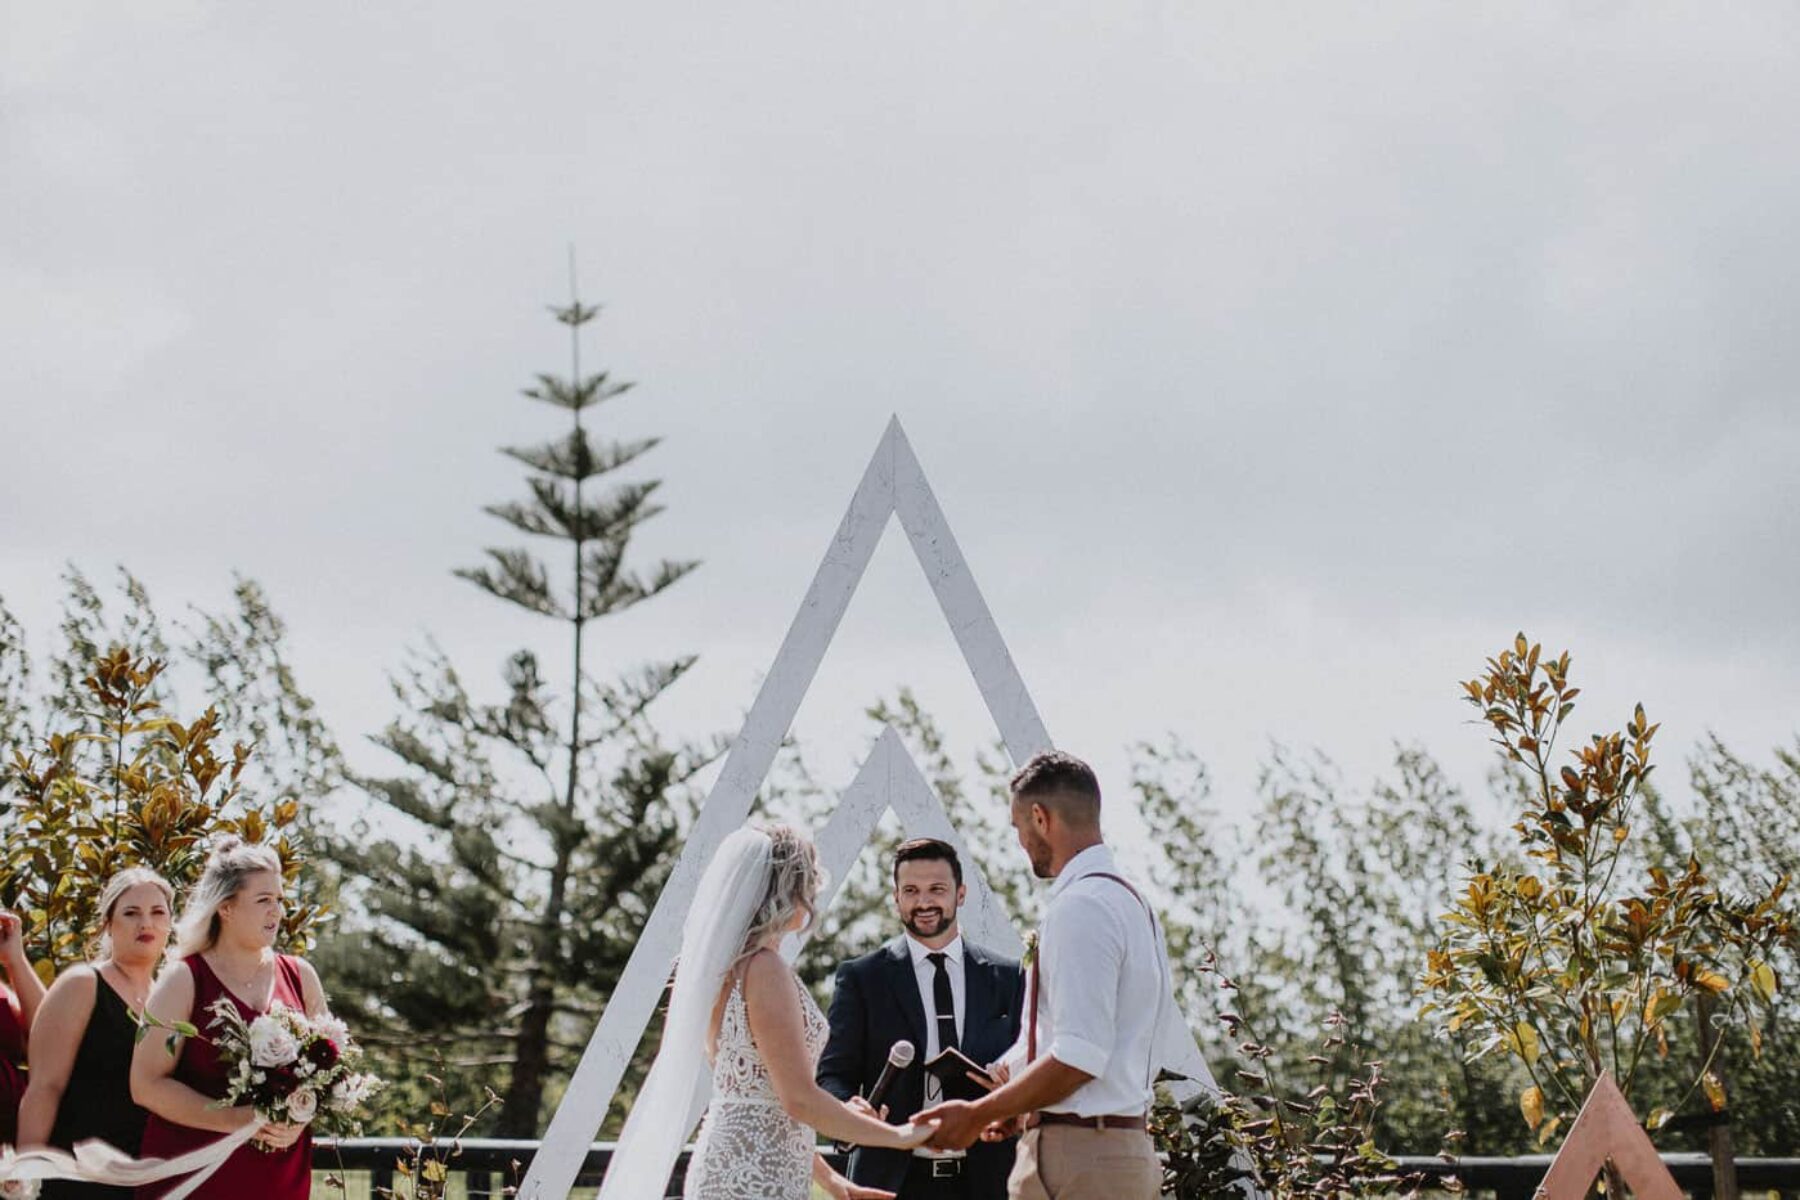 geometric triangular wedding backdrop